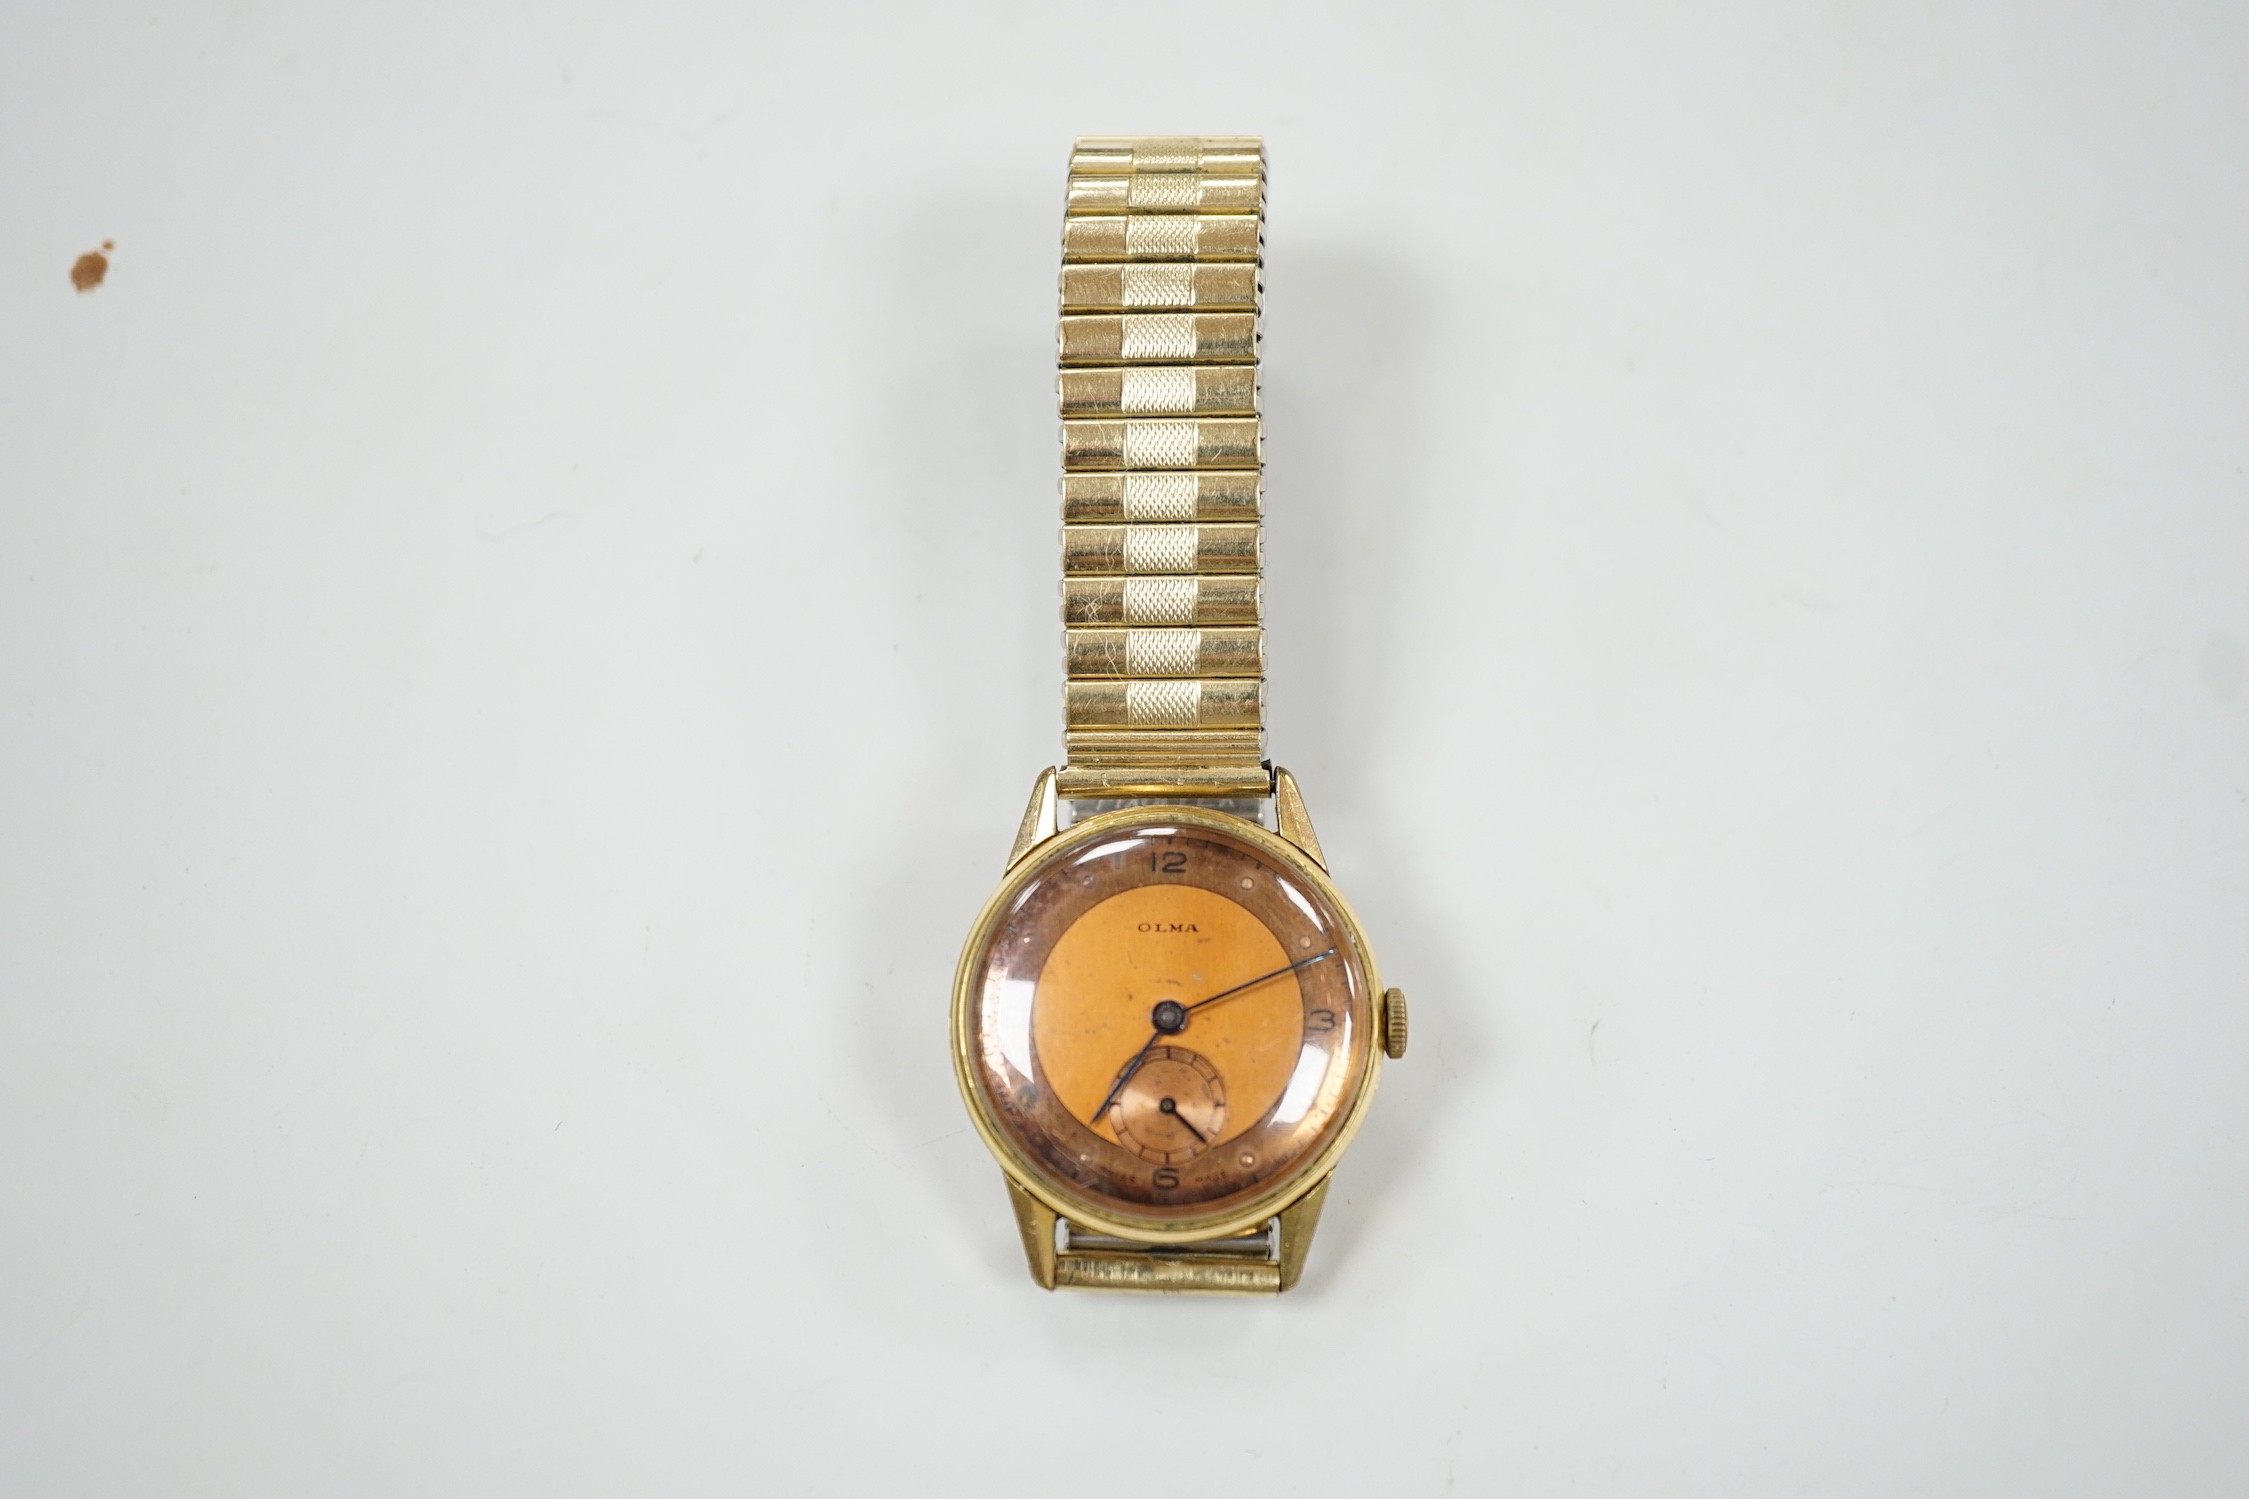 A gentleman's gold plated Olma manual wind wrist watch, case diameter 32mm, on associated flexible bracelet.